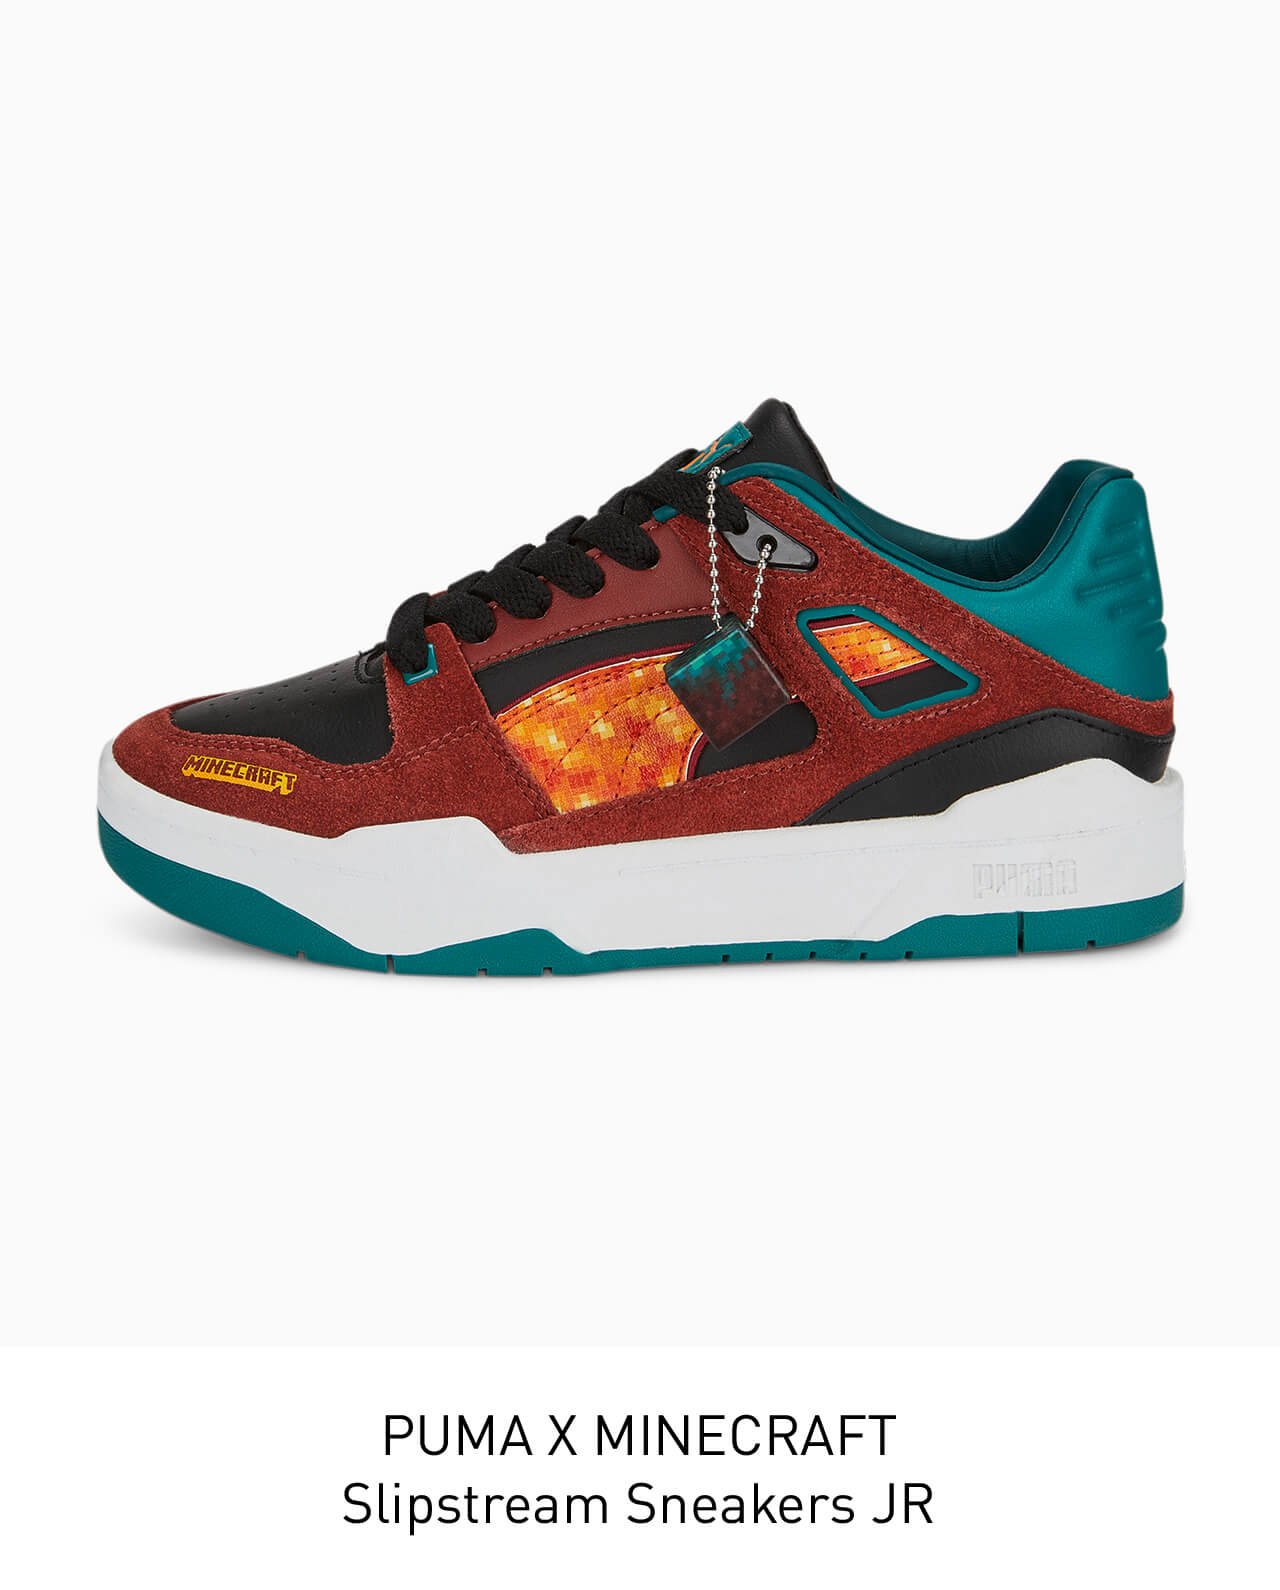 PUMA X MINECRAFT Slipstream Sneakers JR